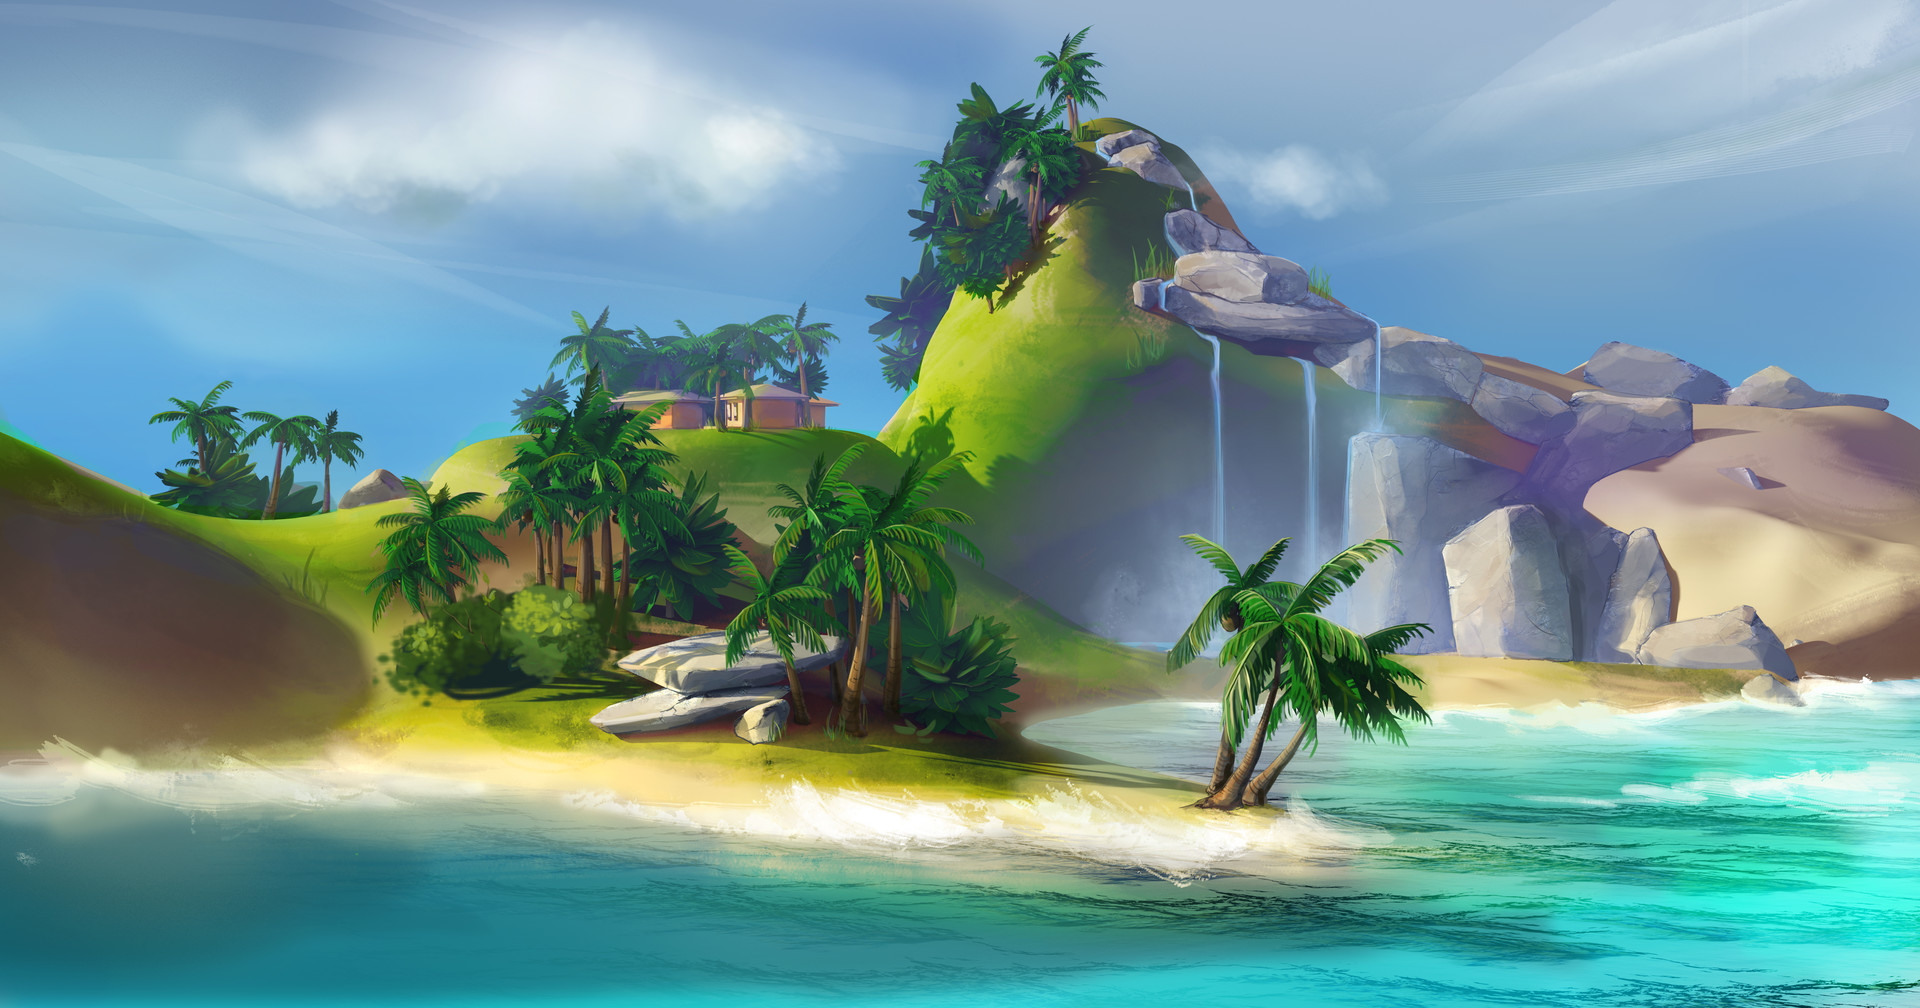 ArtStation - Tropical island